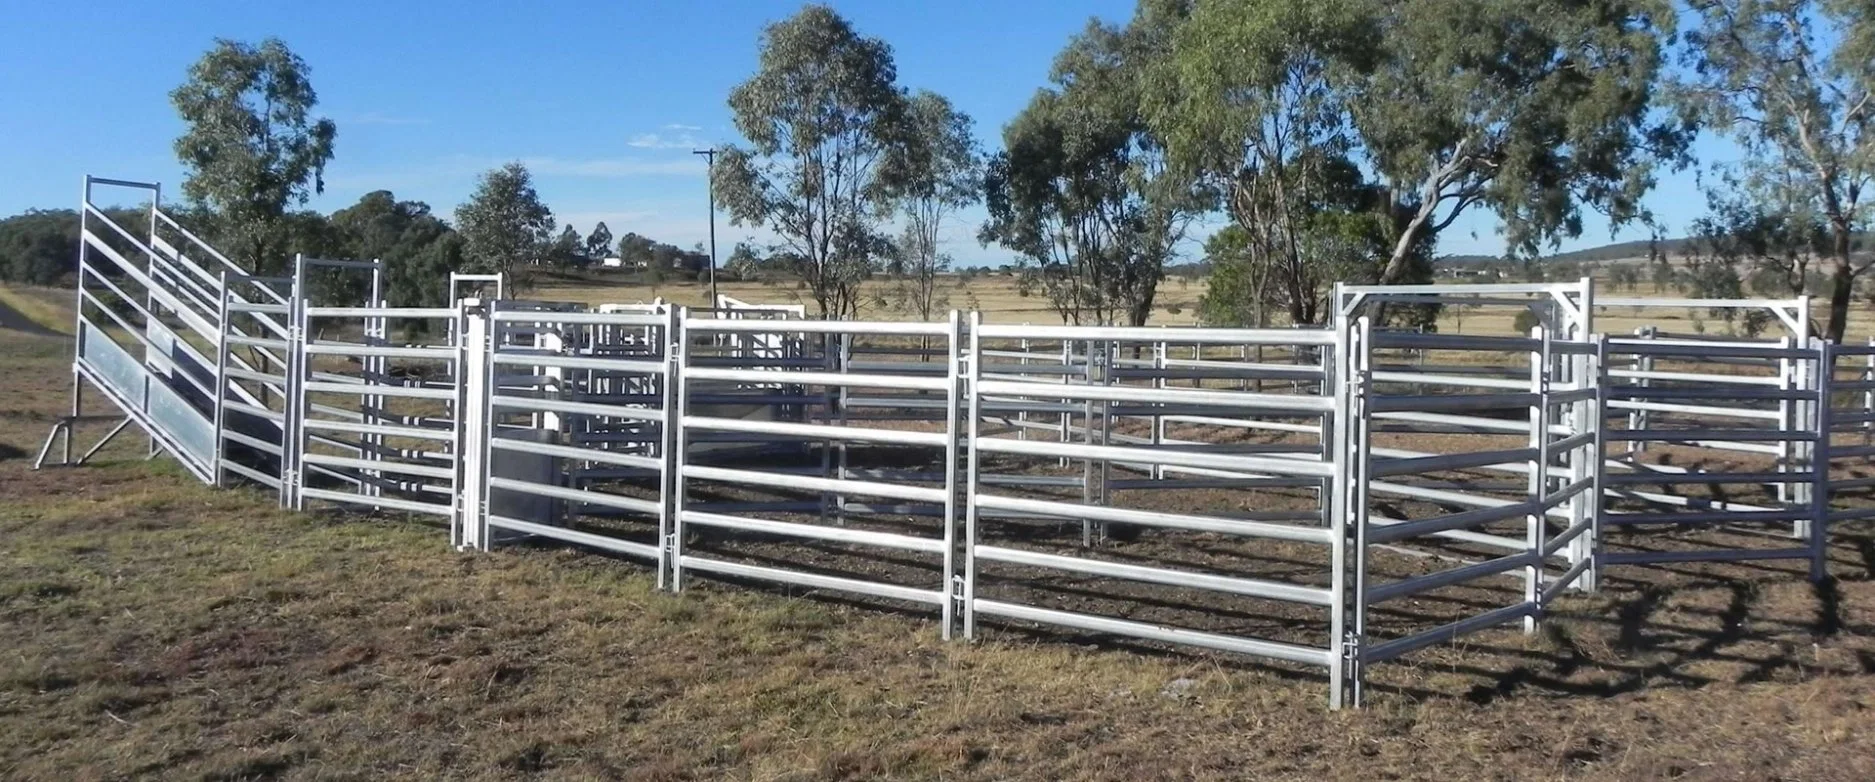 Farm Gate Ranch Gate Horse Raising Sheep Cattle Fence Farm Gate Livestock Breeding Fence